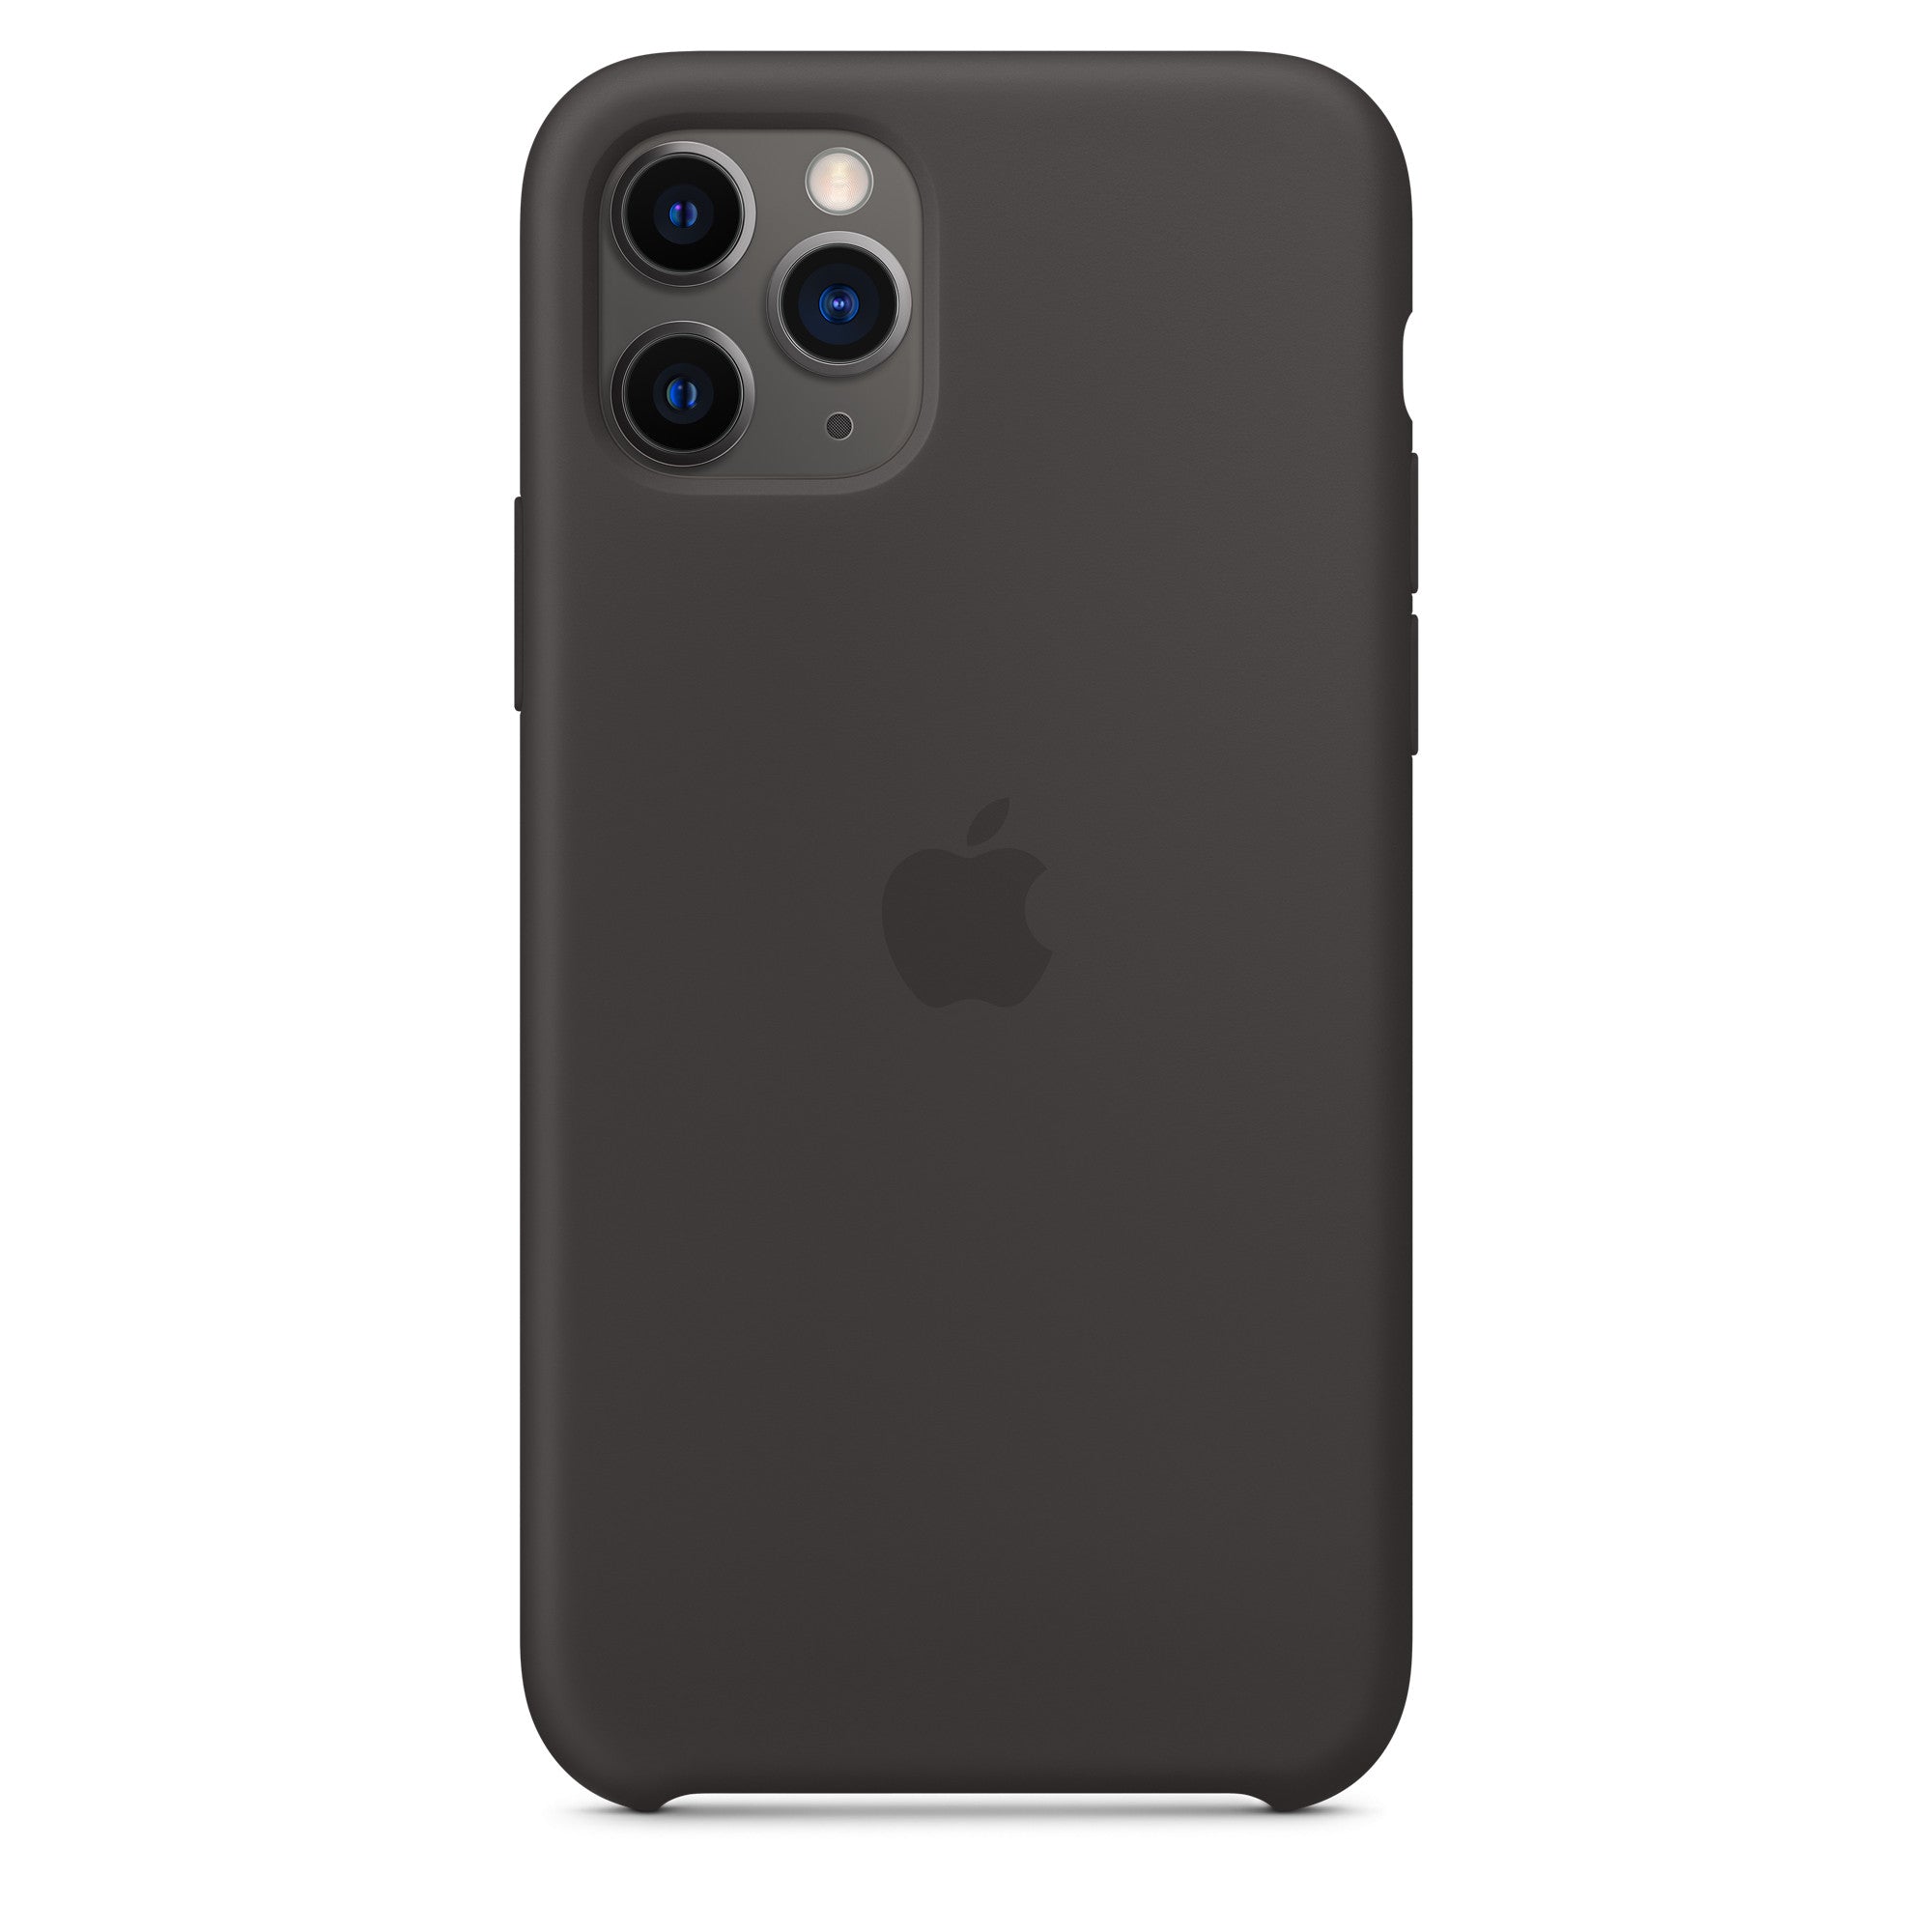 Apple iPhone 11 Pro Silicone Case - Black - Brand New